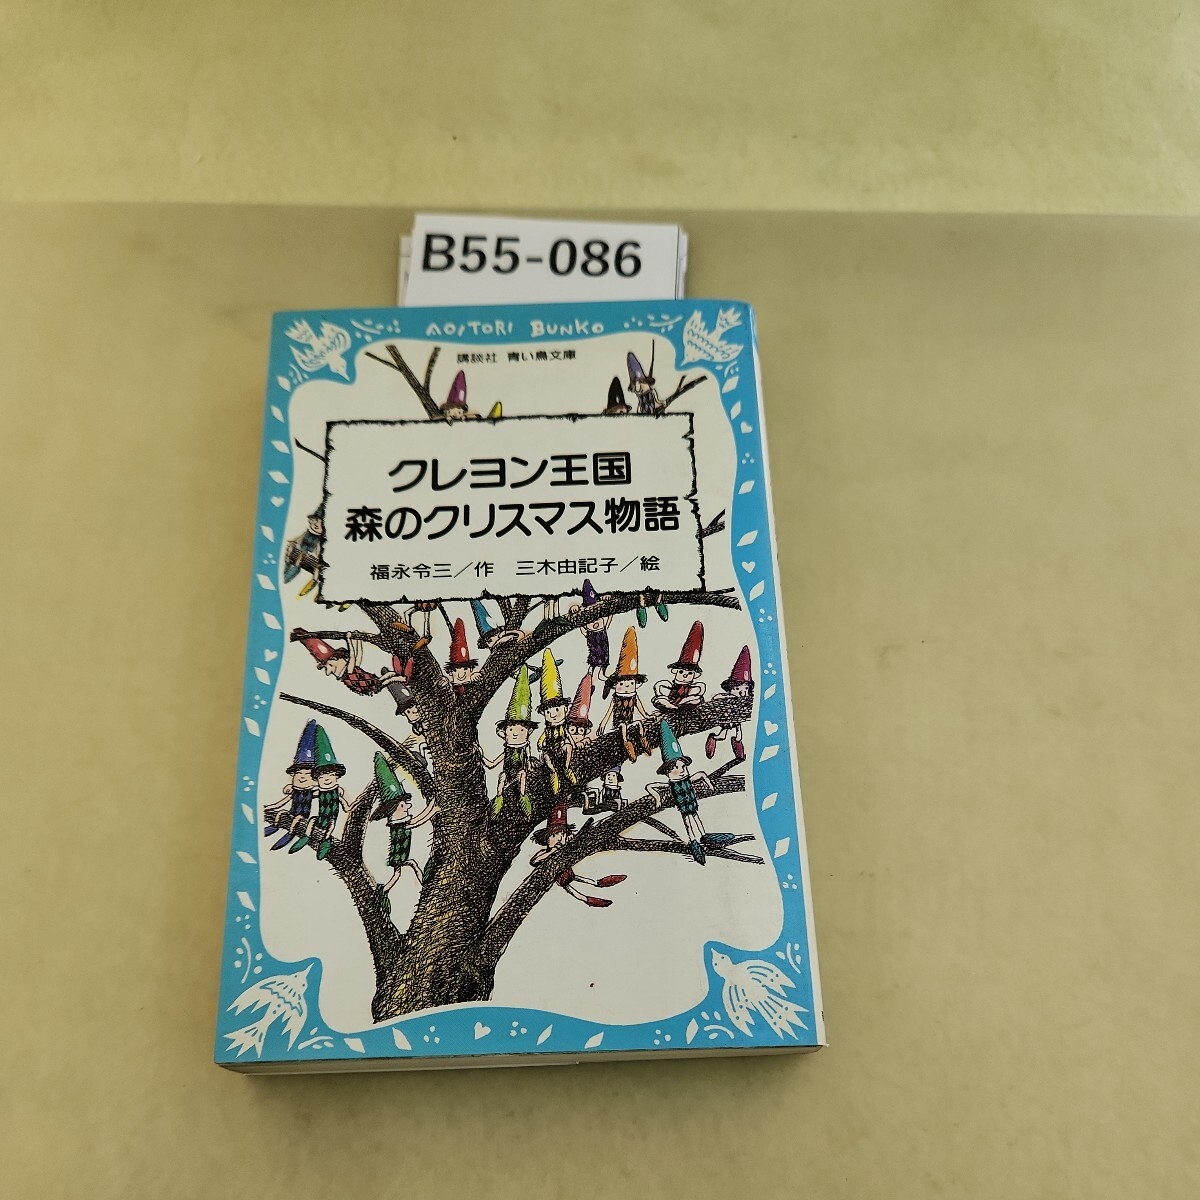 B55-086 クレヨン王国森のクリスマス物語 福永令三 講談社 青い鳥文庫 汚れあり。_画像1